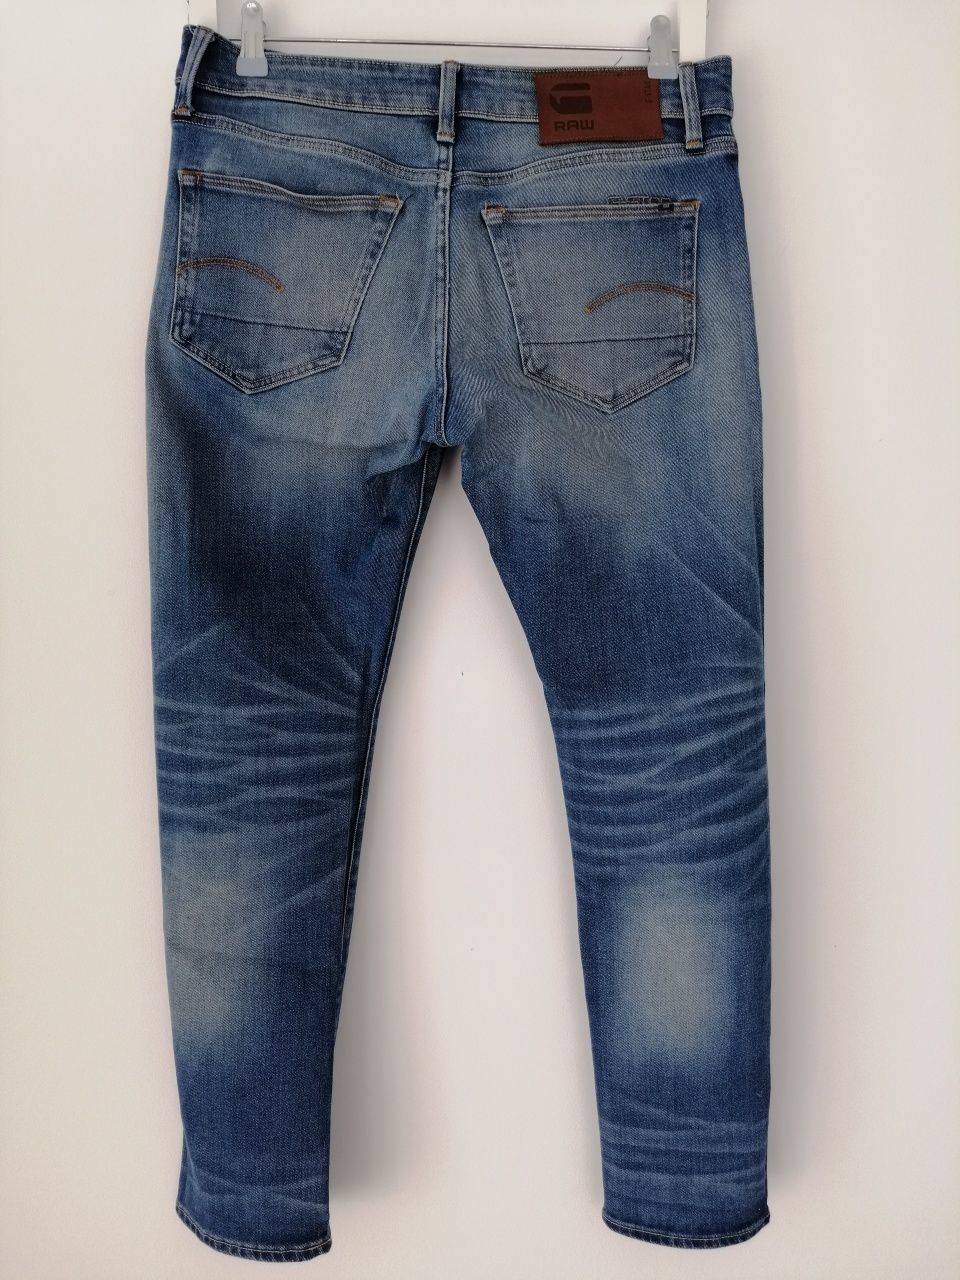 Blugi jeans G star,slimfit, marime 30/30, originali 100% garantat, NOU